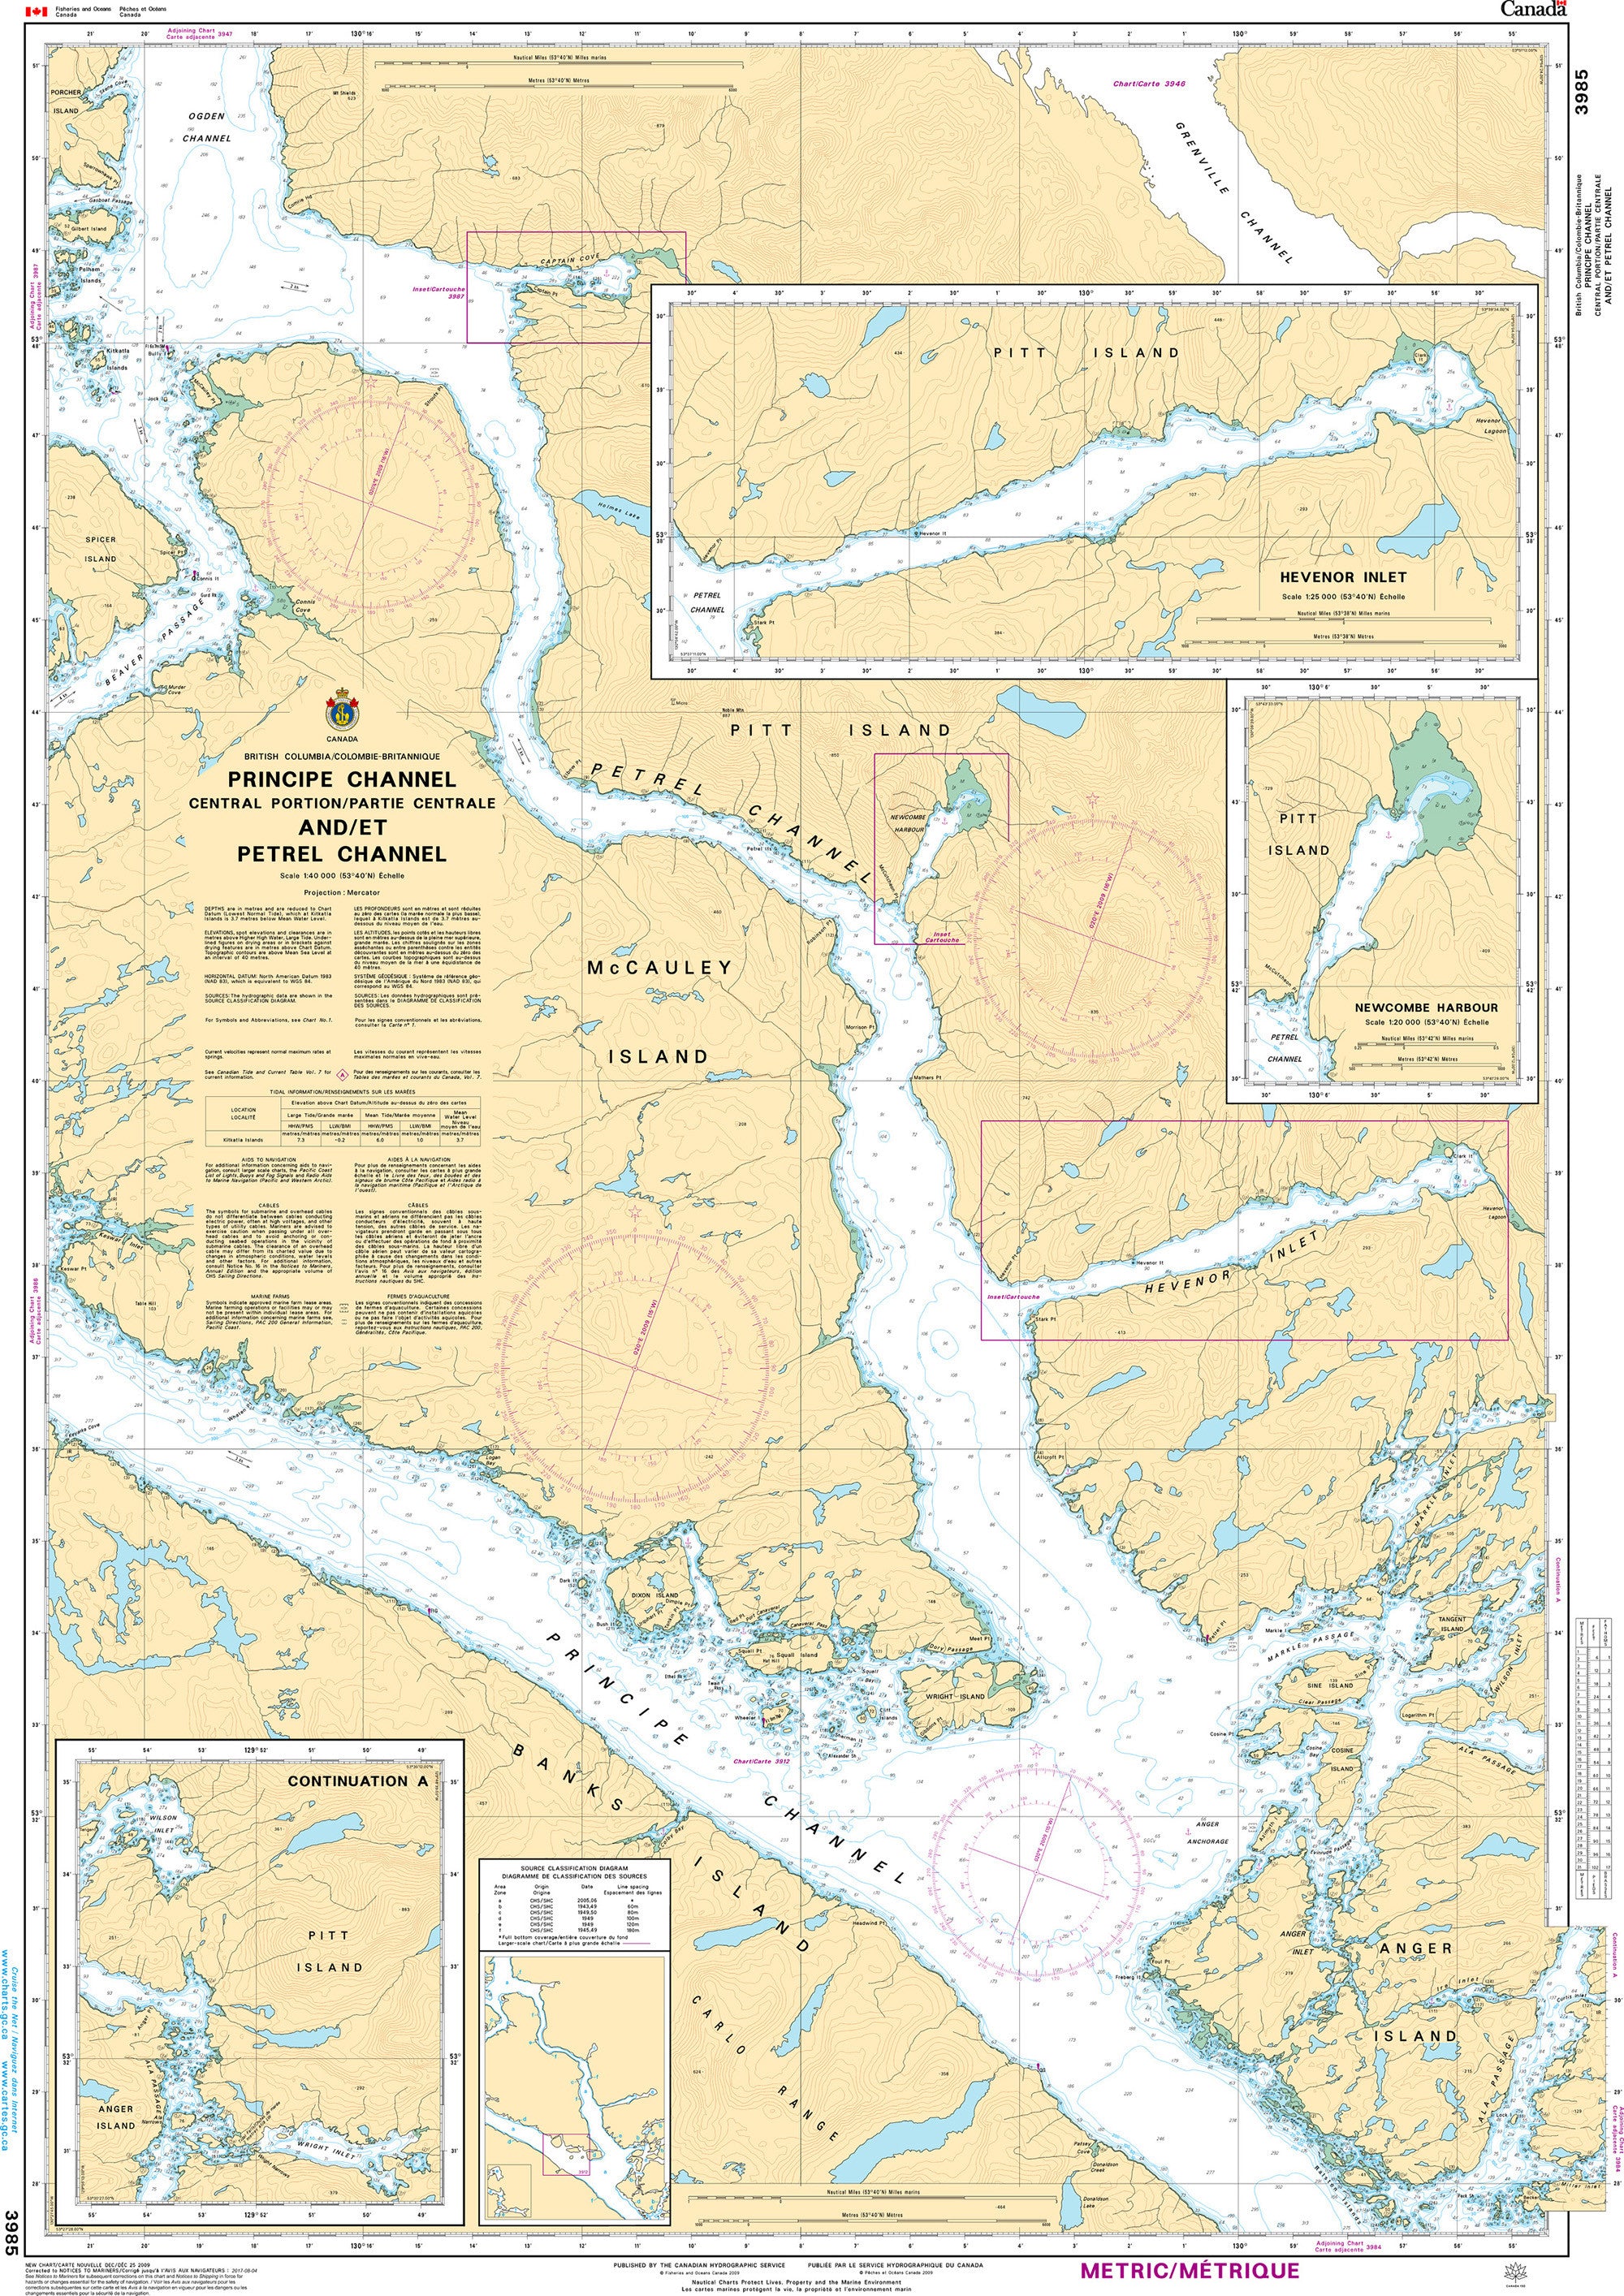 Canadian Hydrographic Service Nautical Chart CHS3985: Principe Channel Central Portion/Partie Centrale and/et Petrel Channel